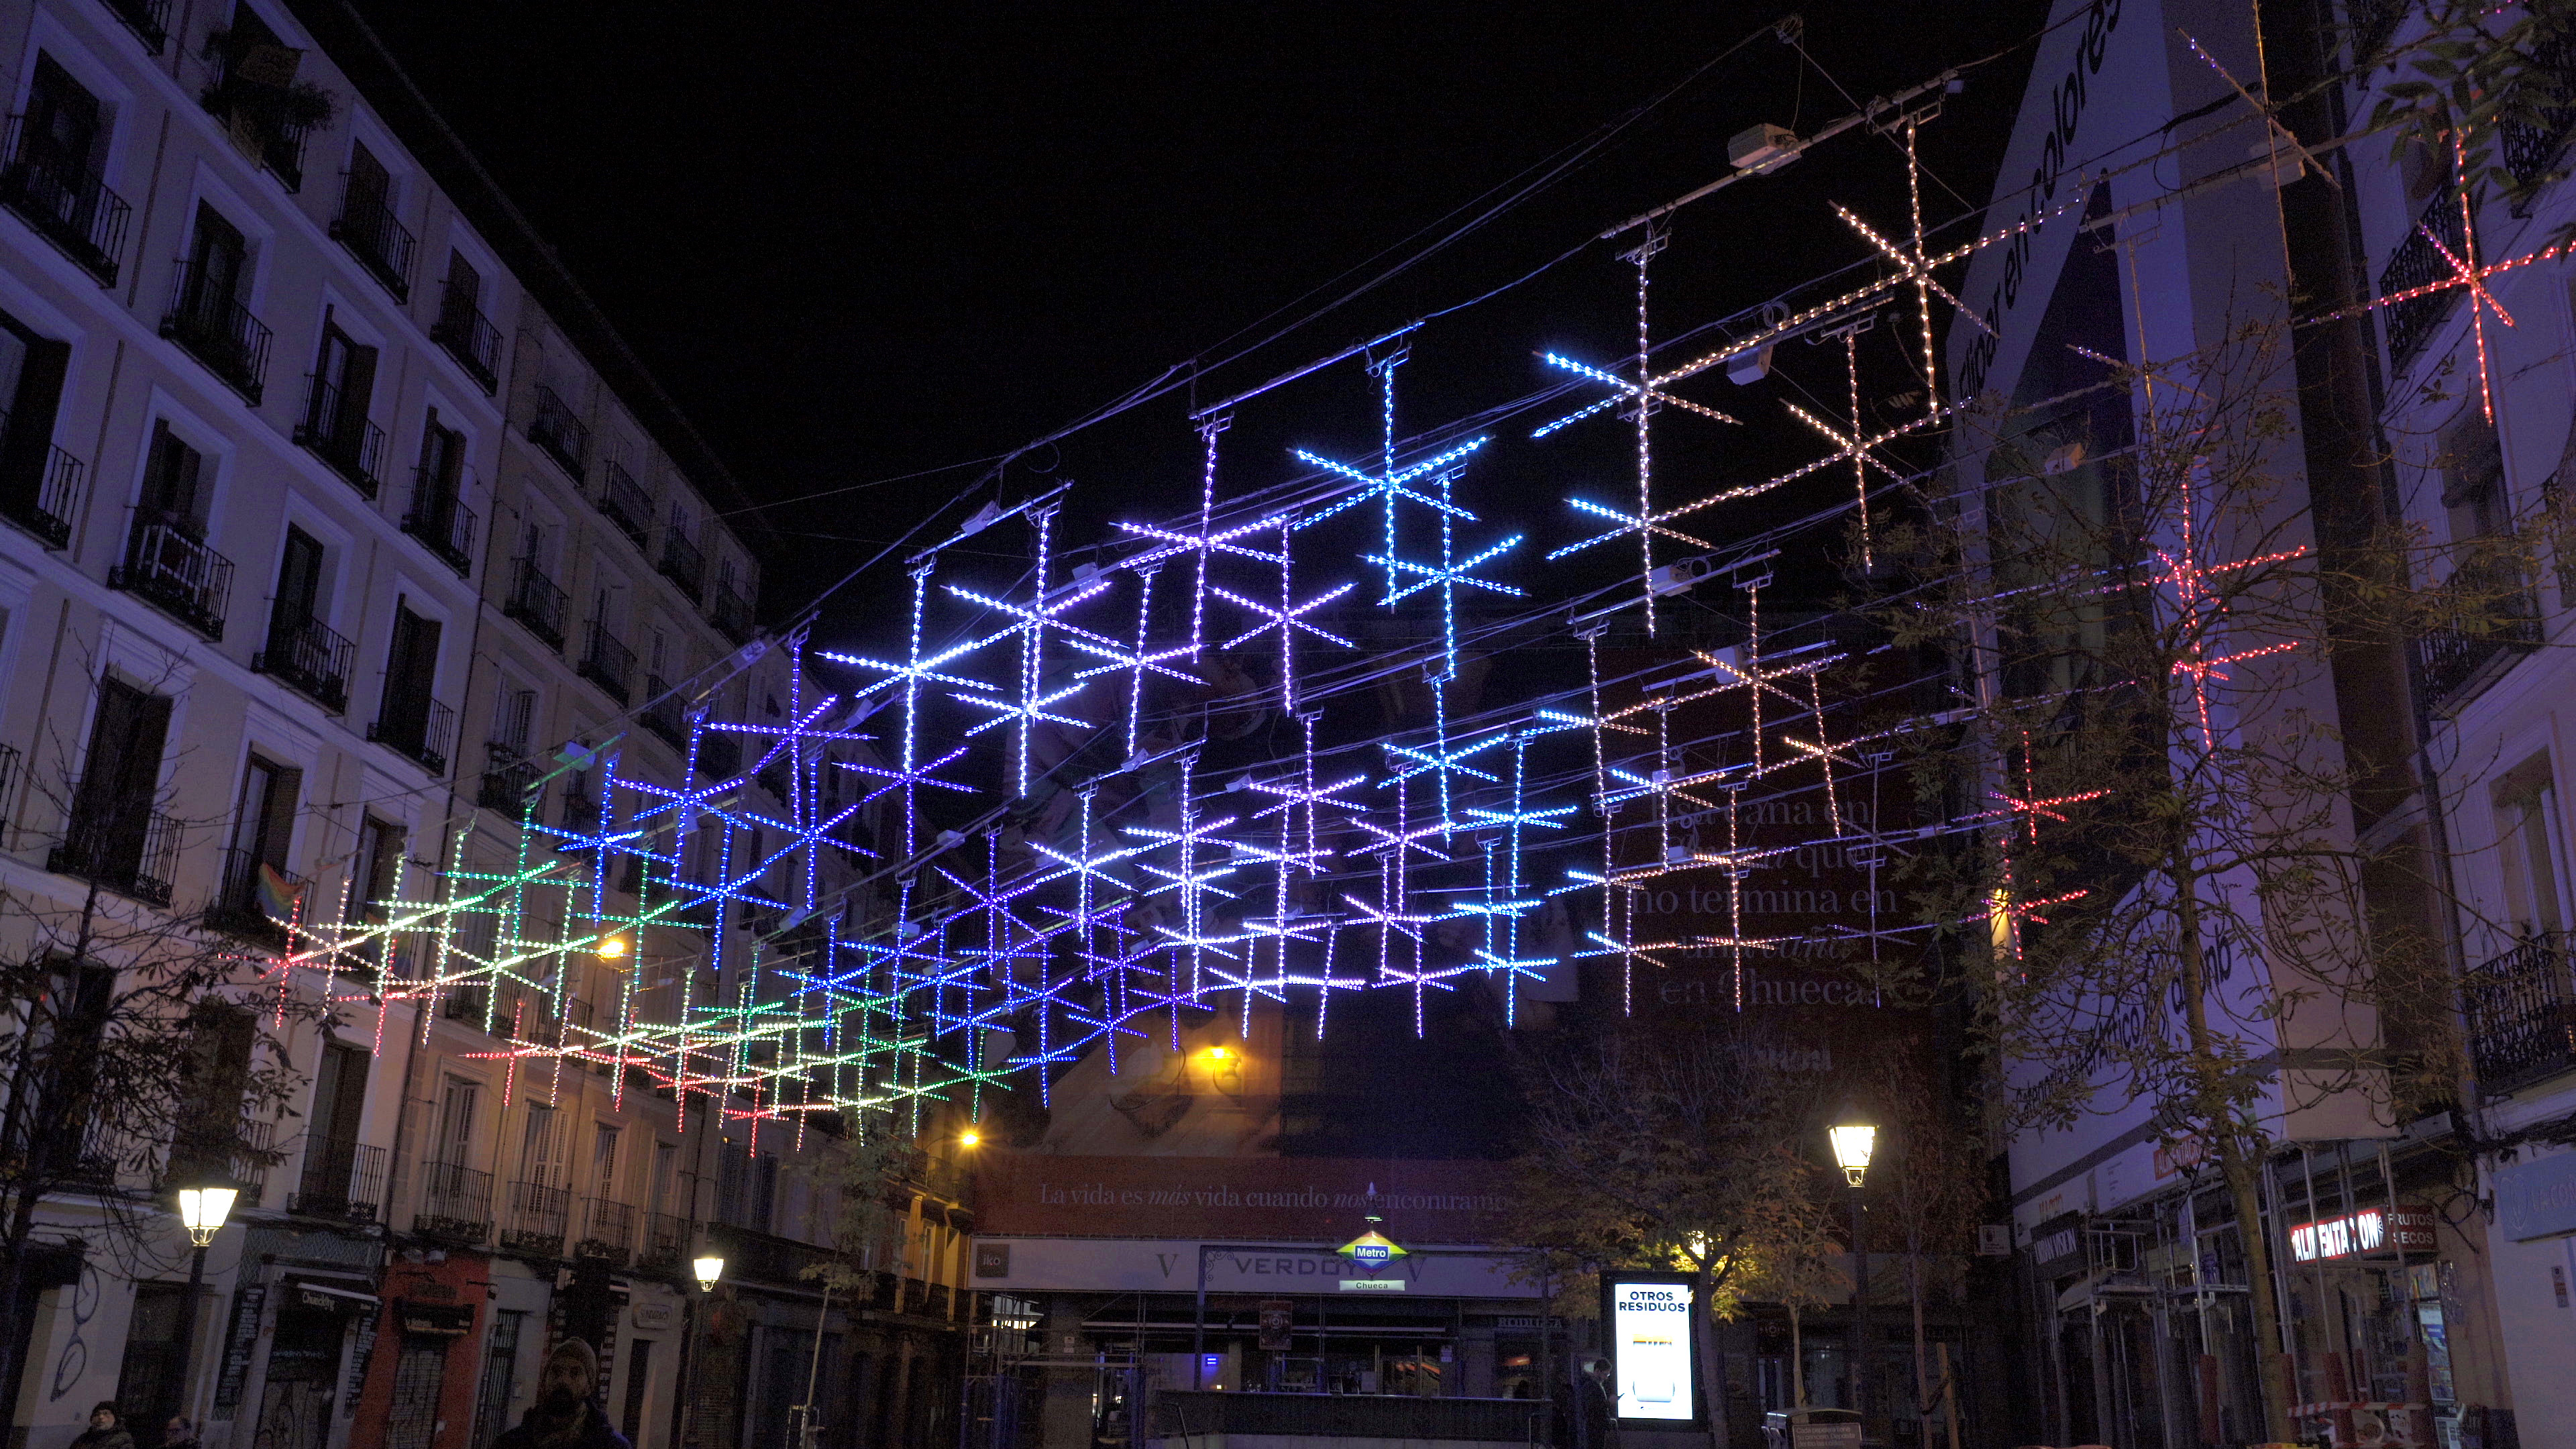 Novedad iluminación navideña de este 2022 en plaza de Chueca